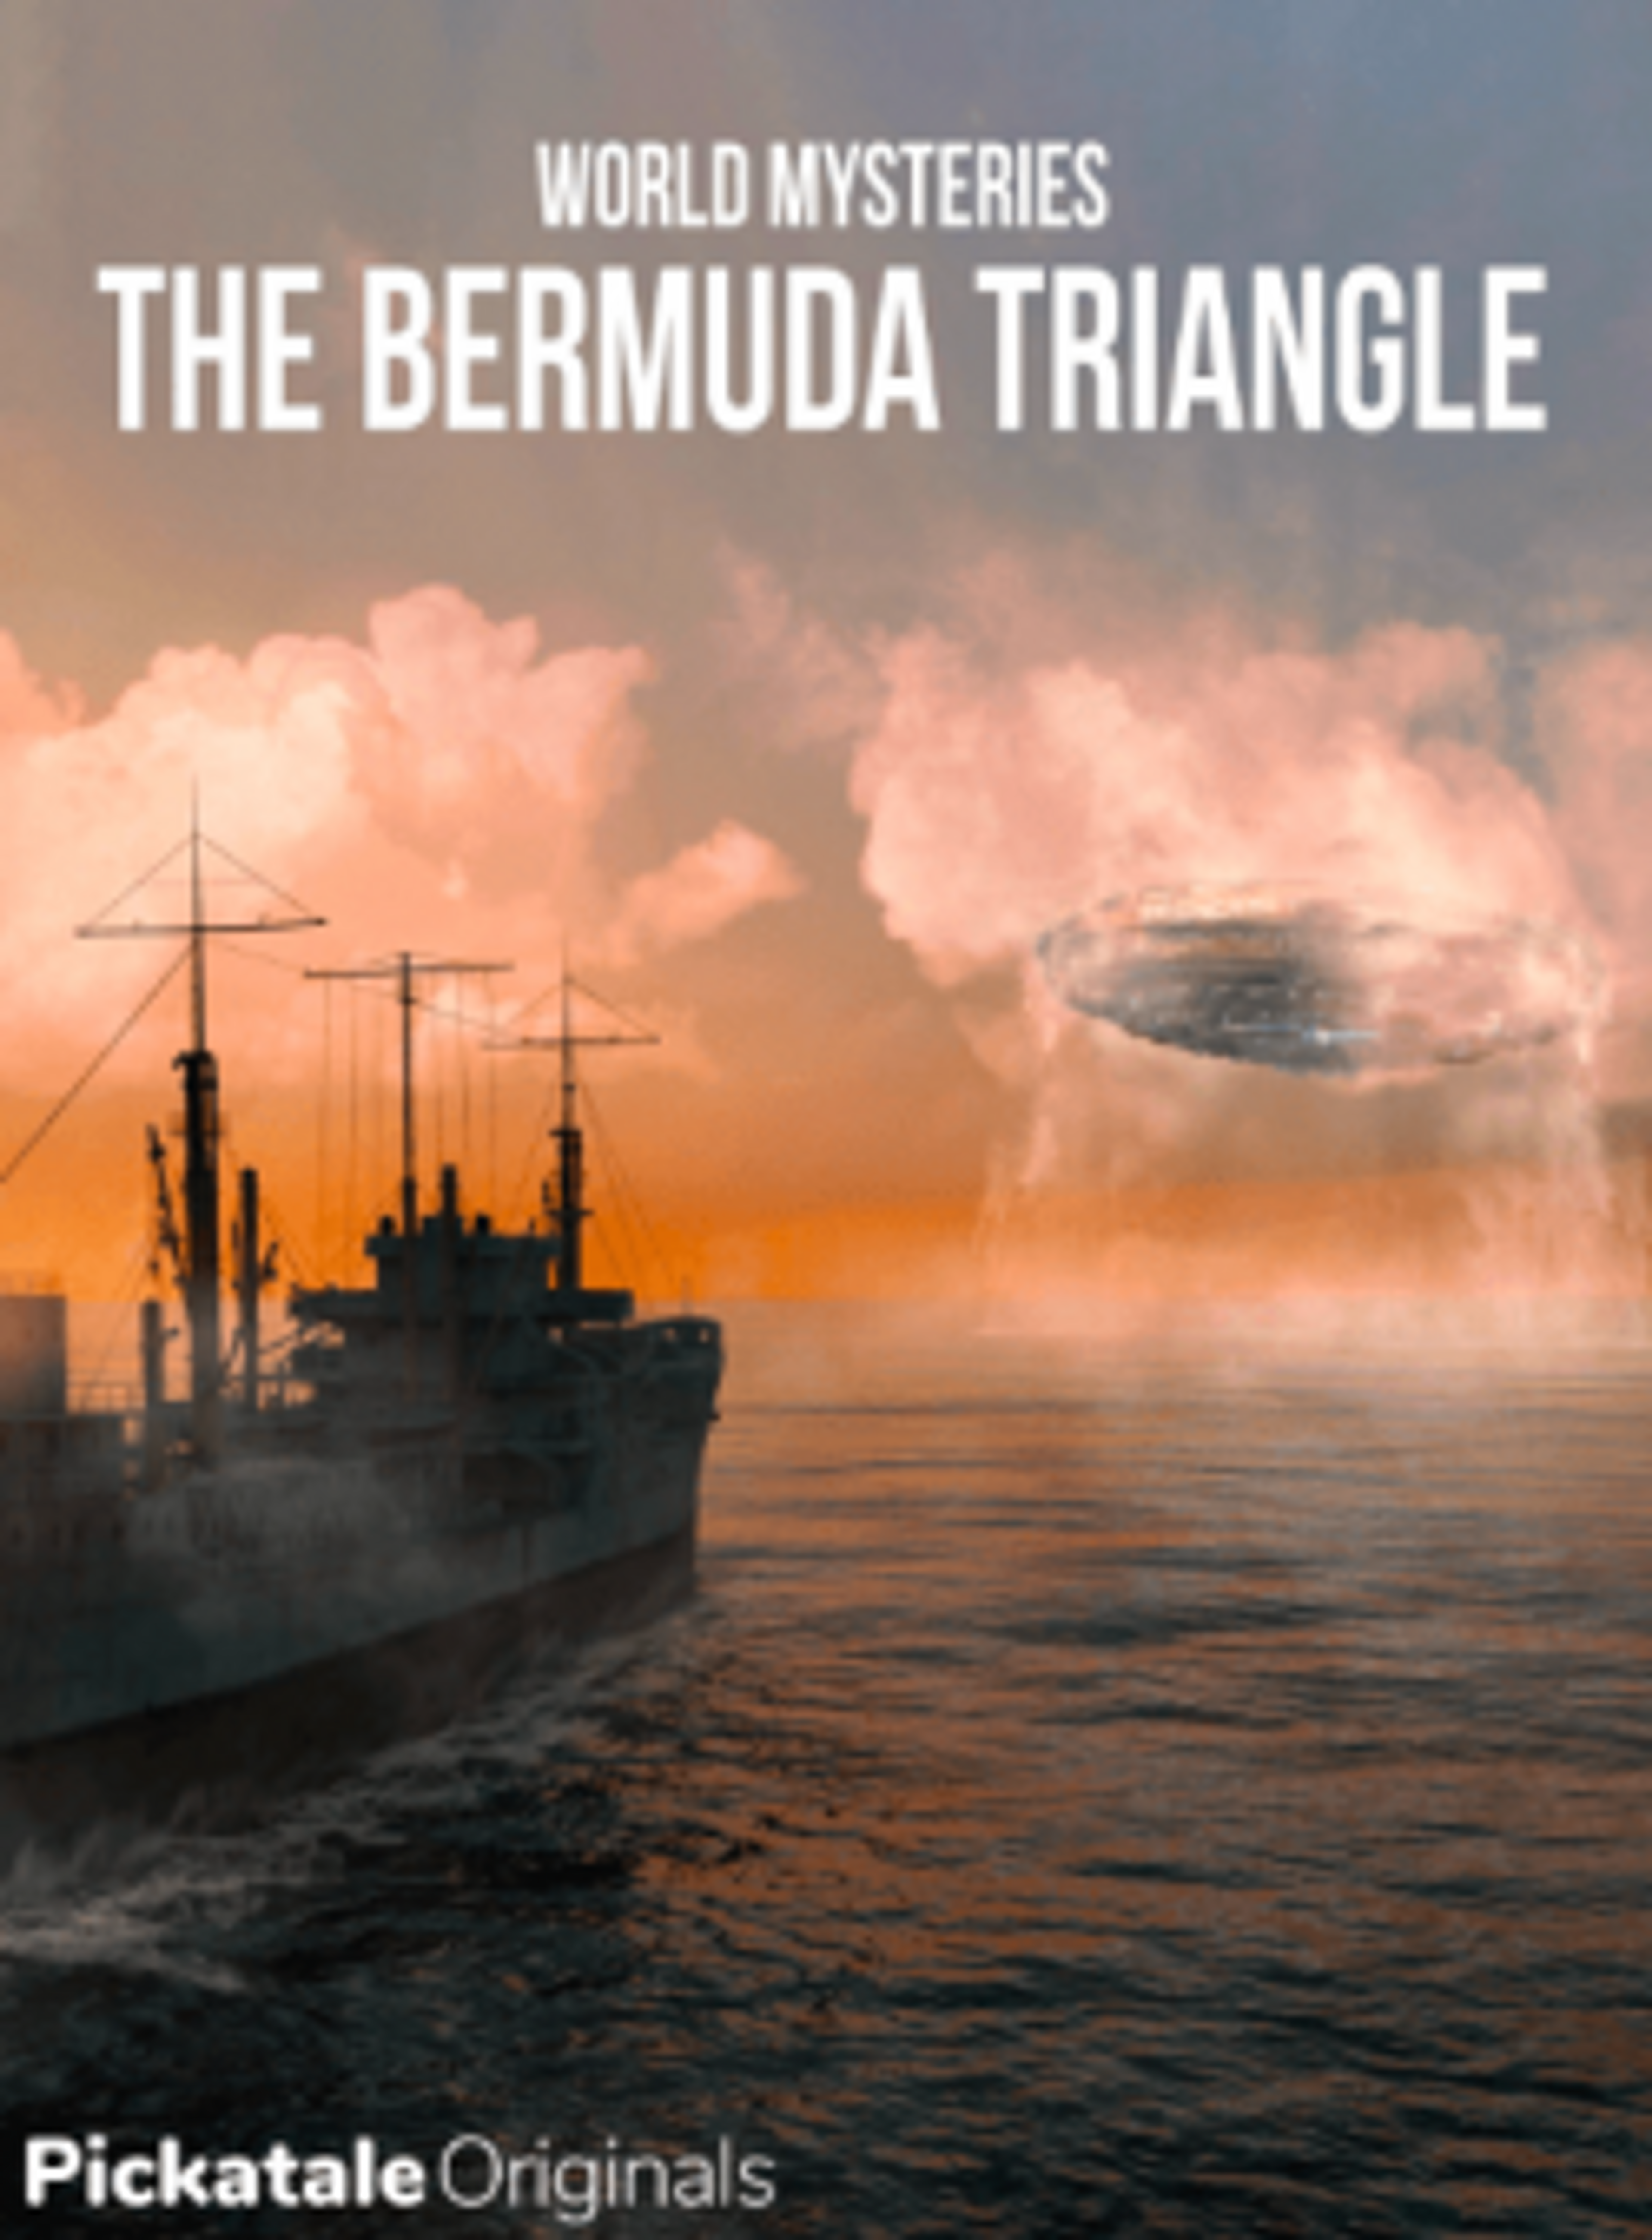 World Mysteries - The Bermuda Triangle (Pickatale Original)